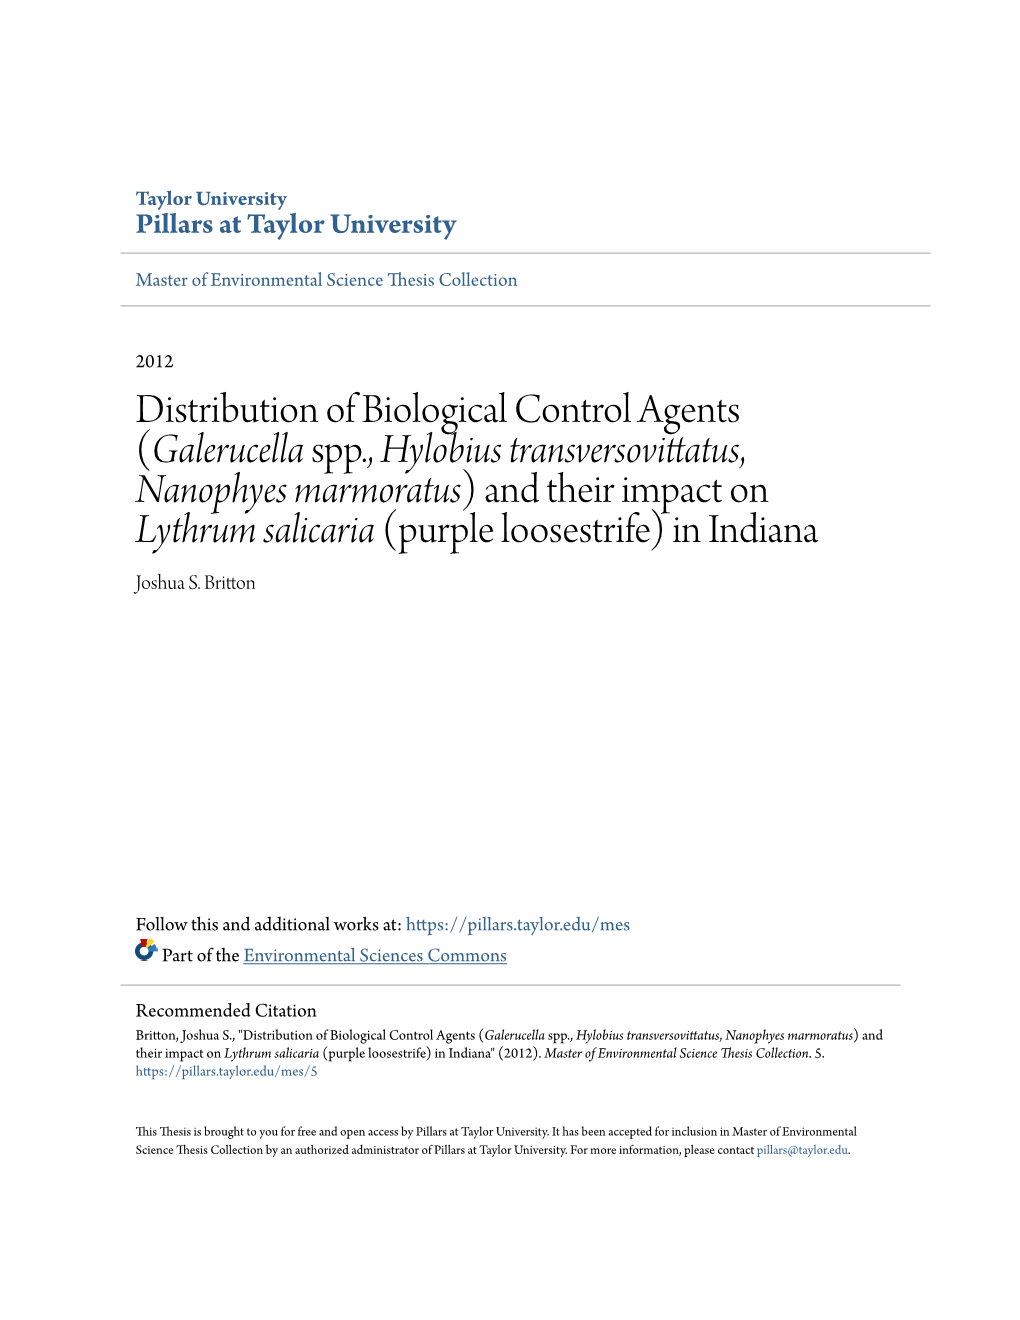 Distribution of Biological Control Agents (Galerucella Spp., Hylobius